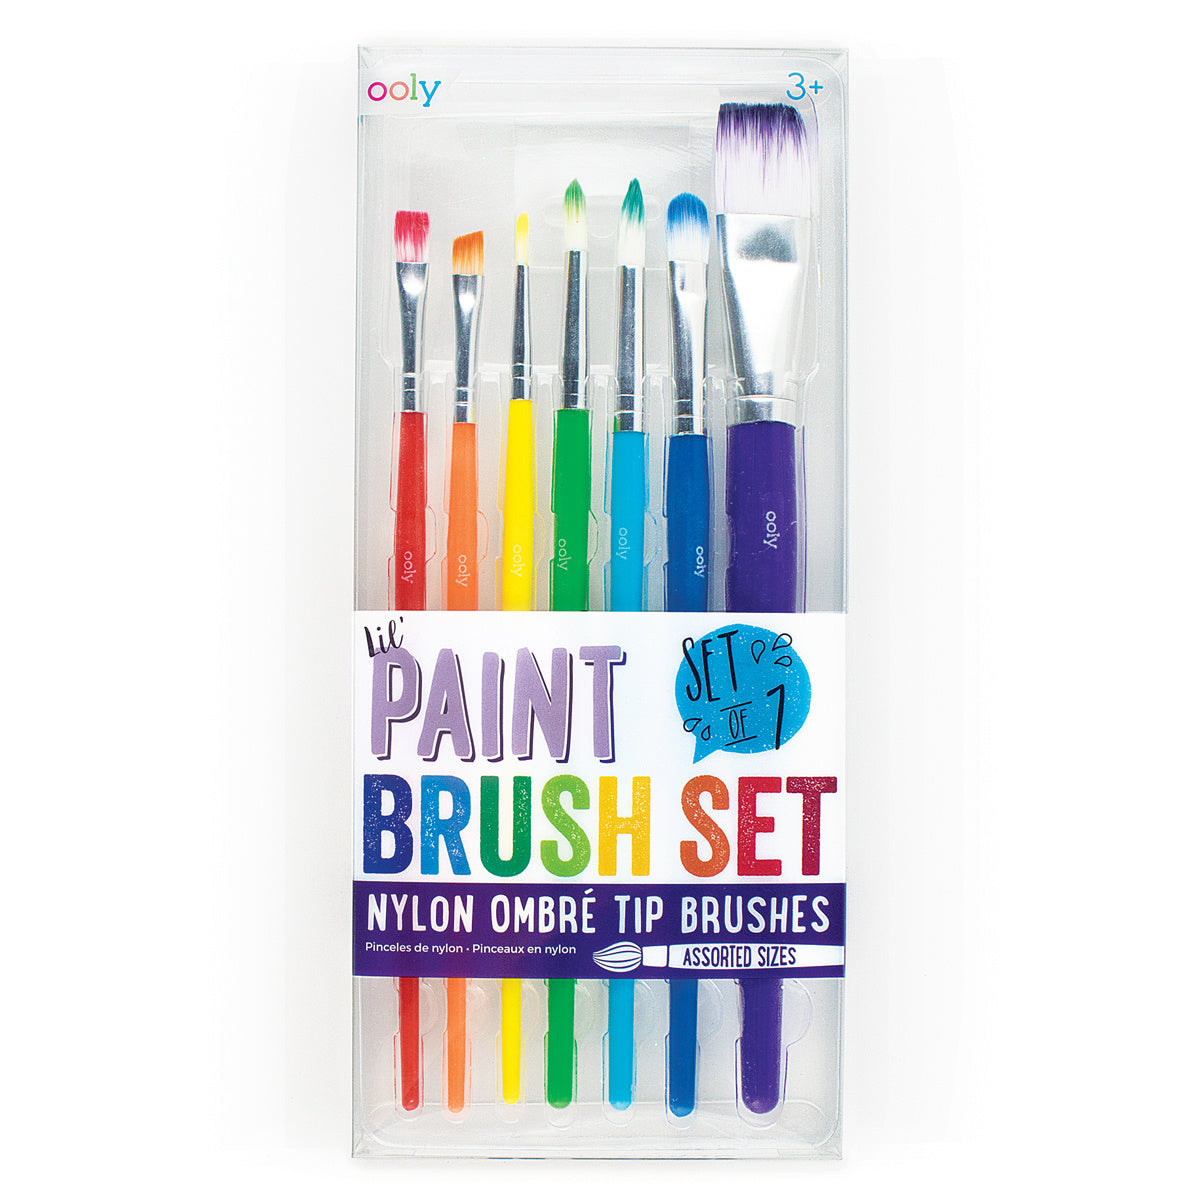 Lil' Paint Brush Set Cover